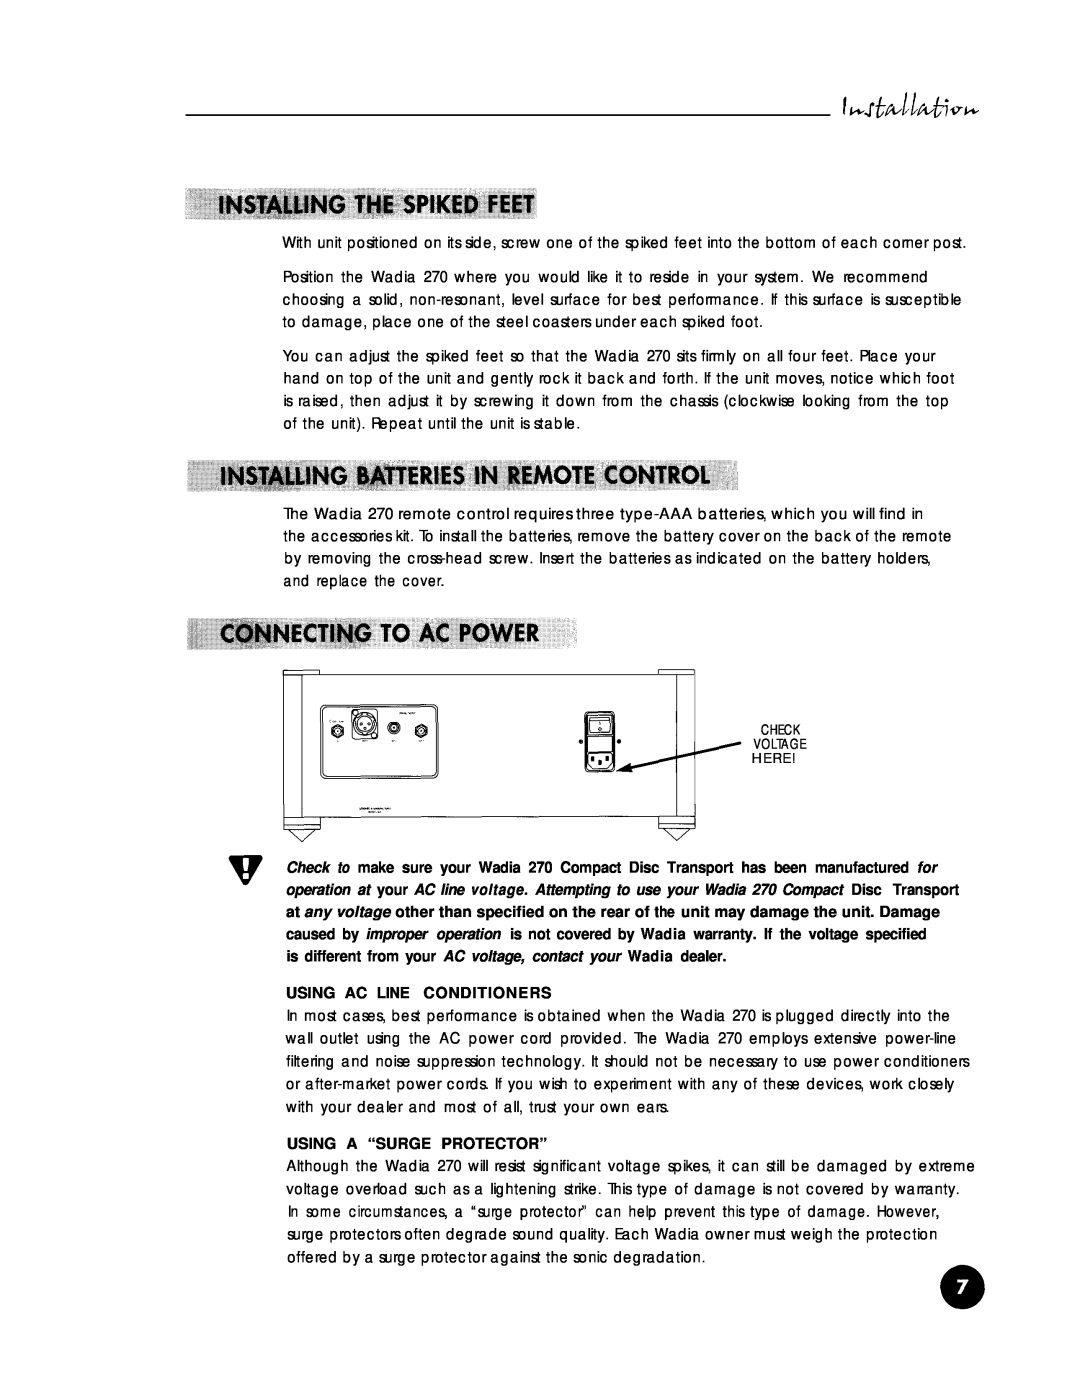 Wadia Digital 270 operation manual Using Ac Line Conditioners, Using A “Surge Protector”, Check Voltage A. H E R E 